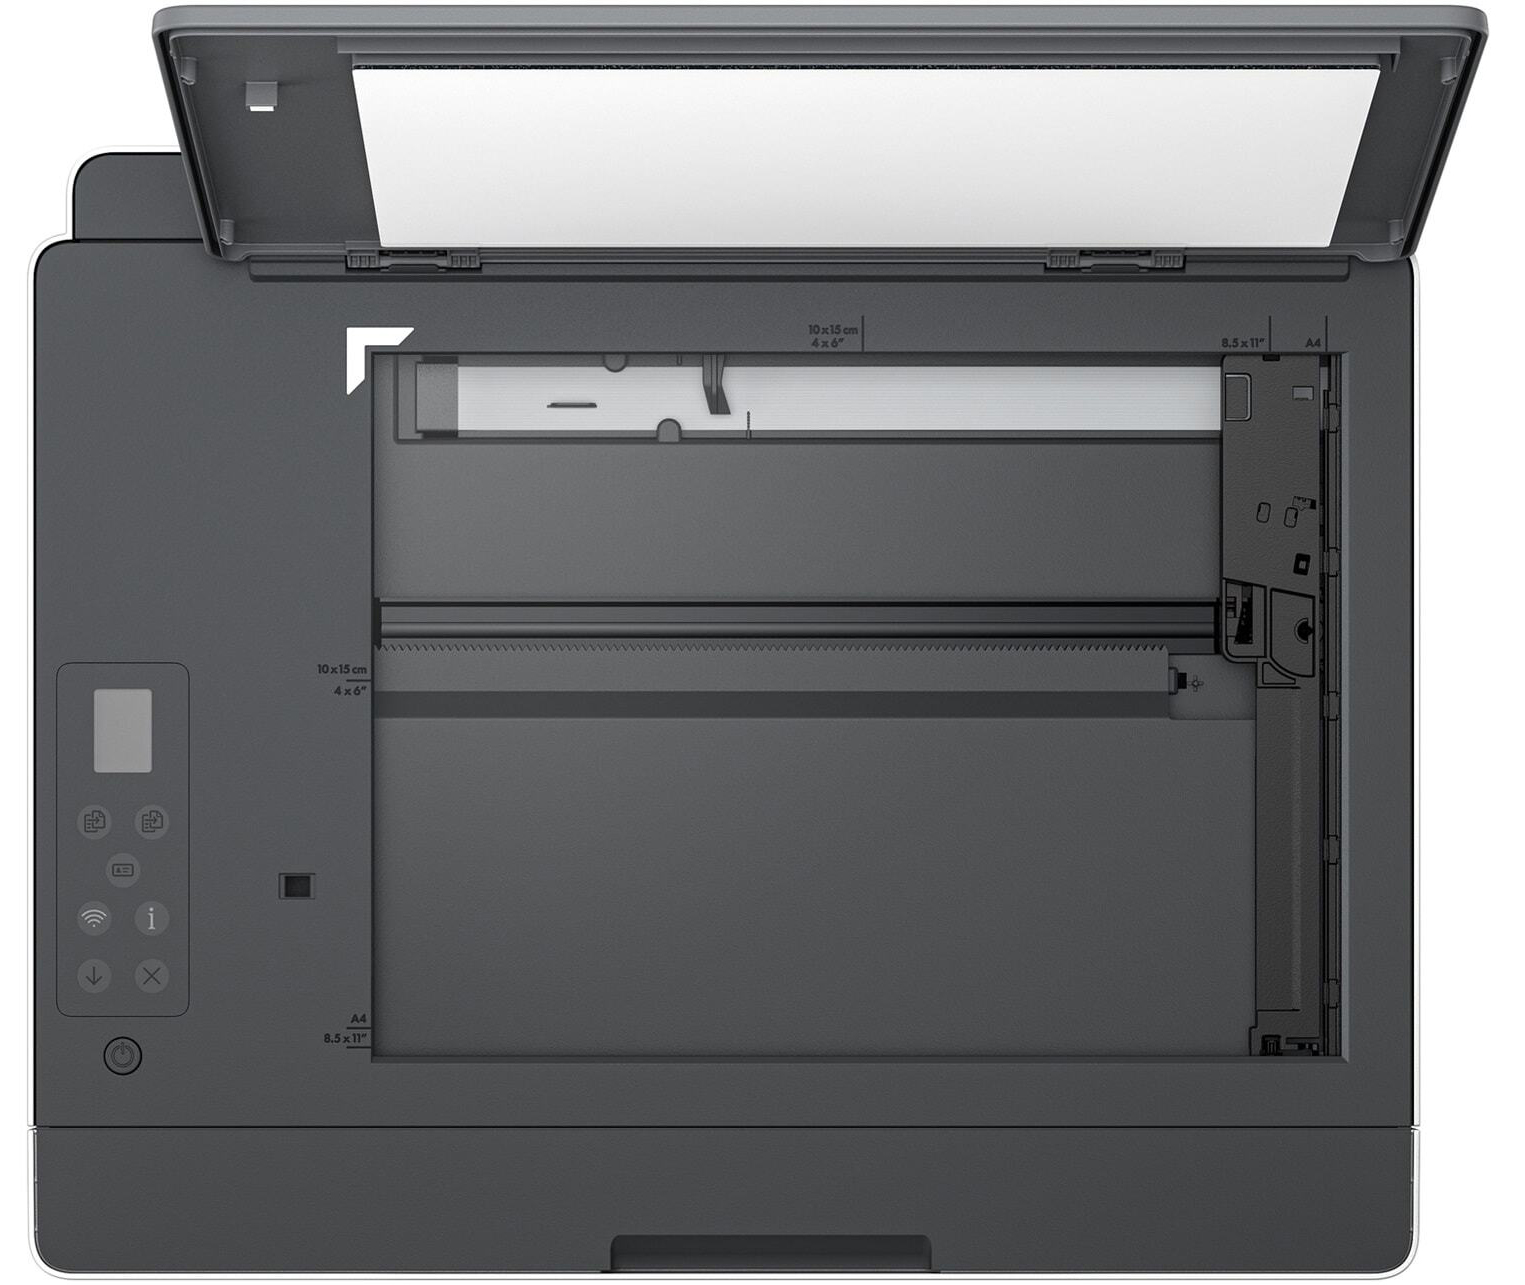 HP - Impressora Jato de Tinta HP Smart Tank 5105 All-in-ONE WiFi